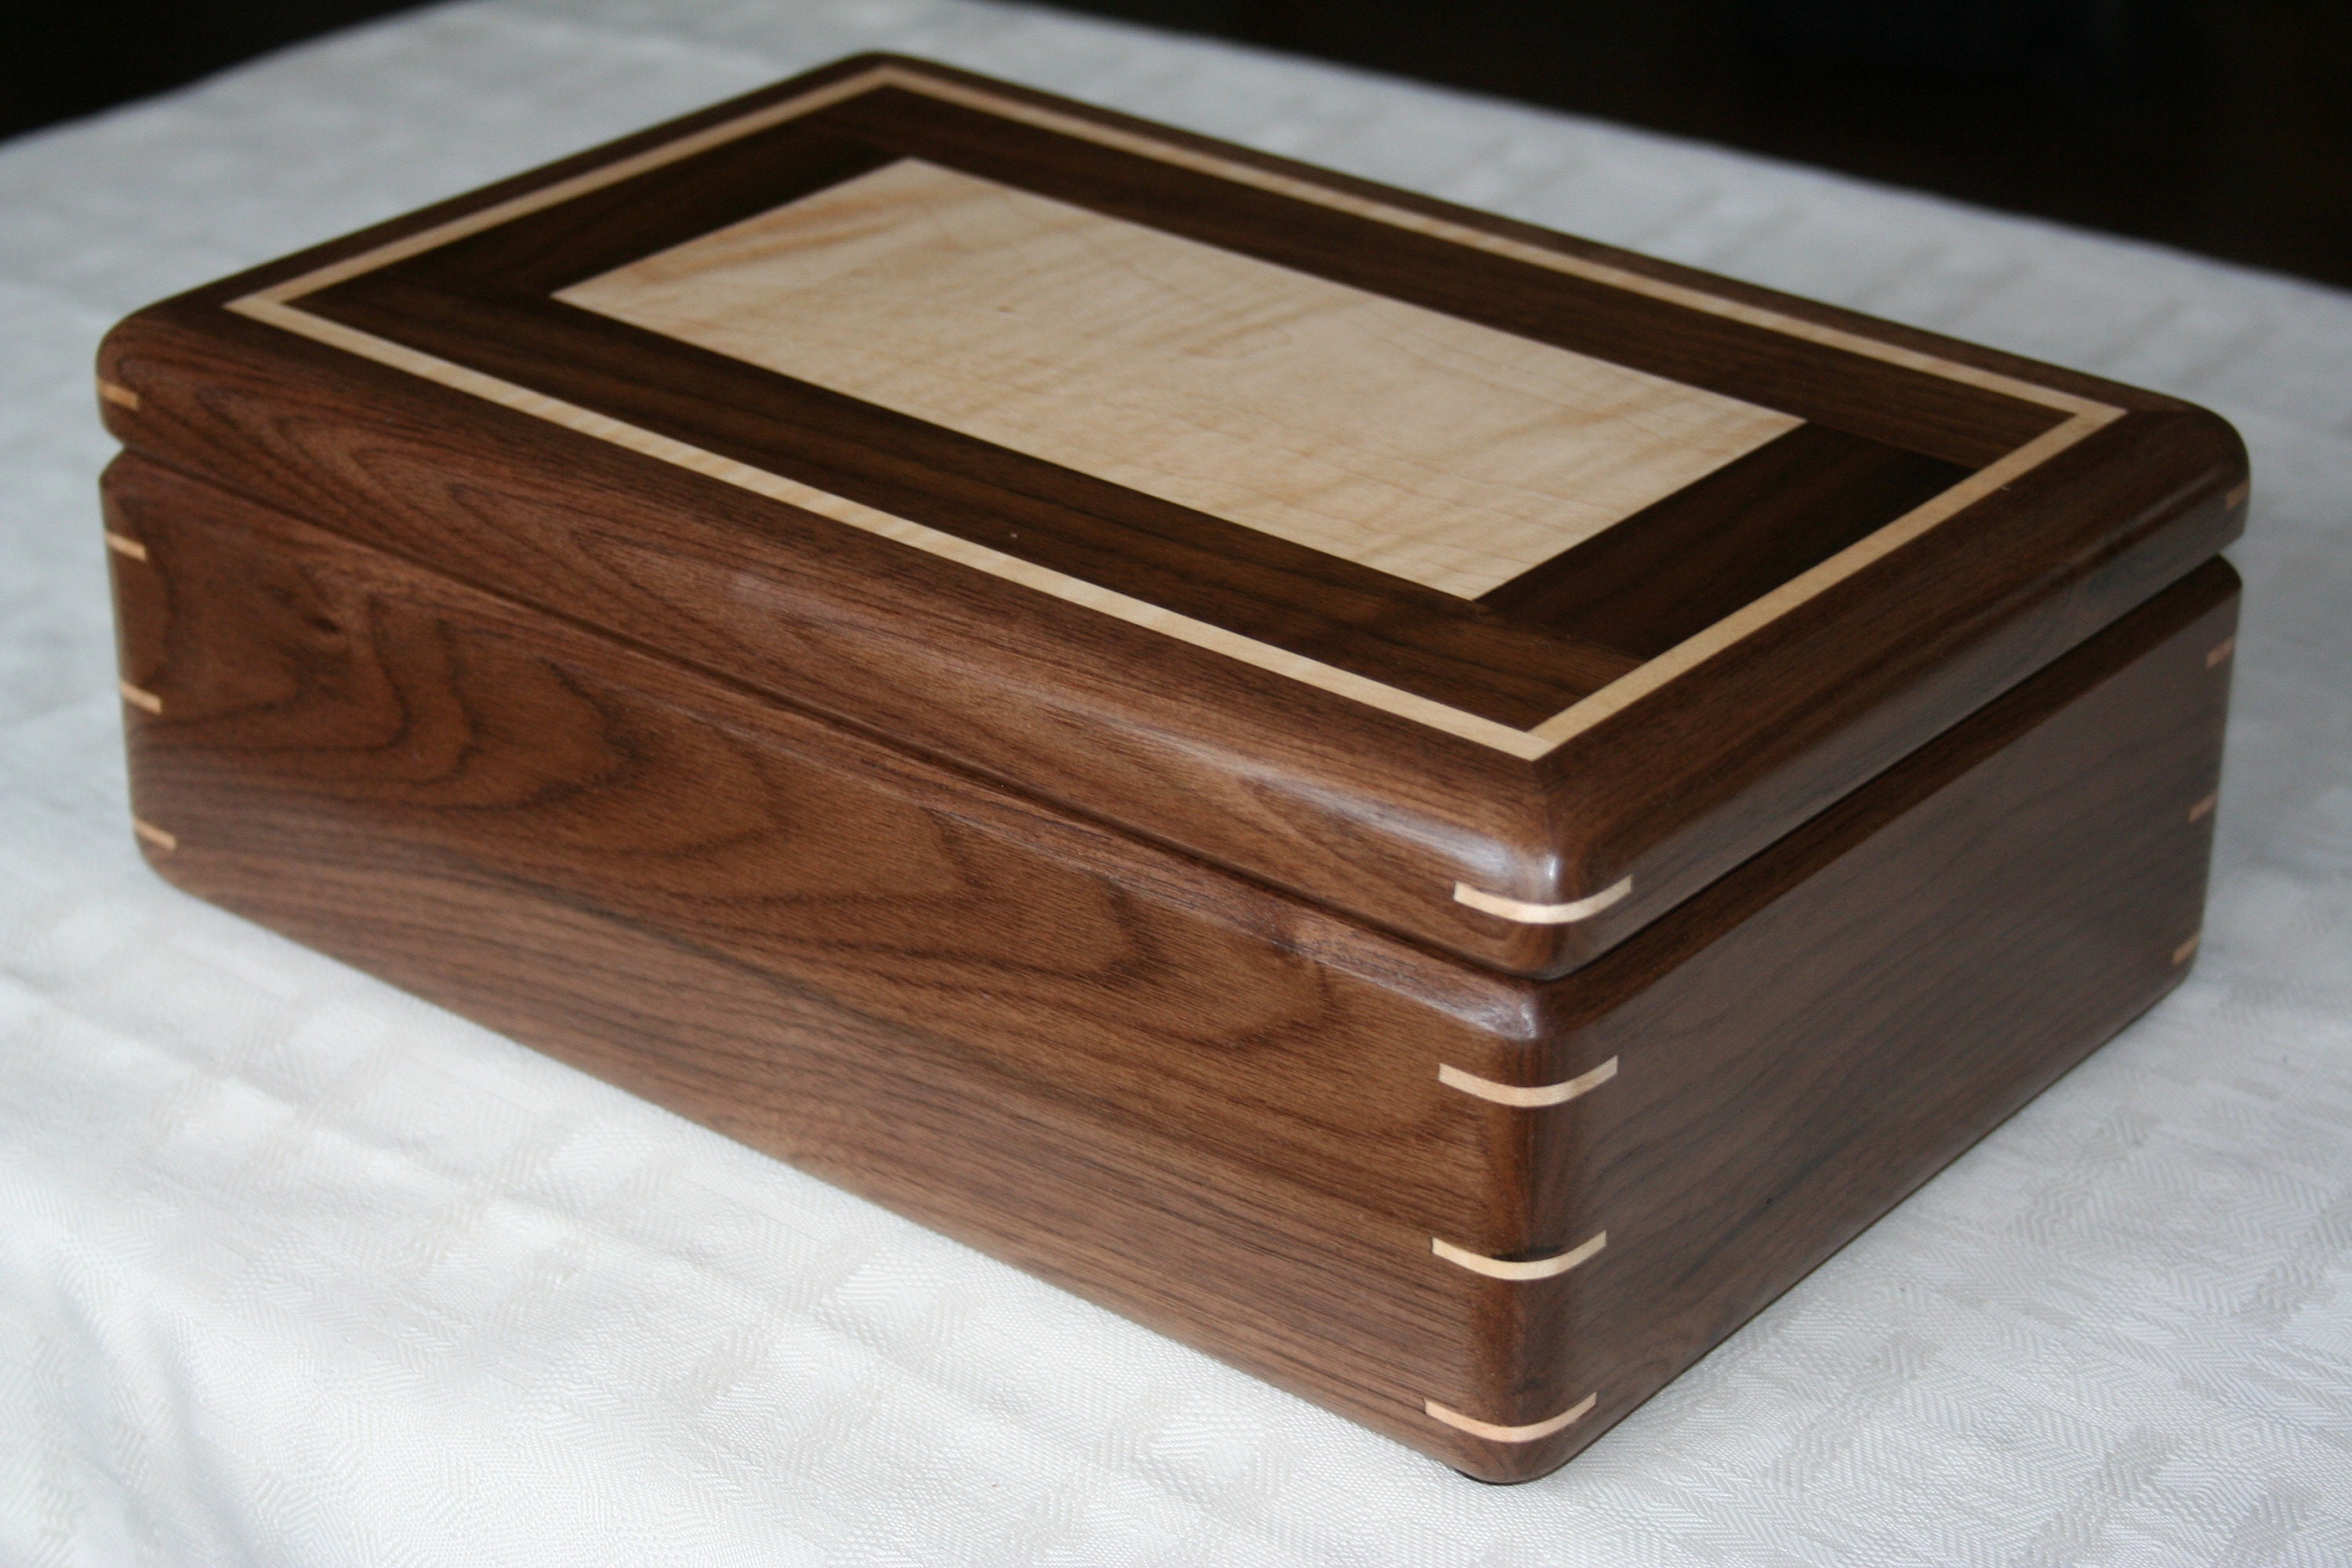 American Walnut and Figured Maple Wood Jewelry Box, Wood Jewelry